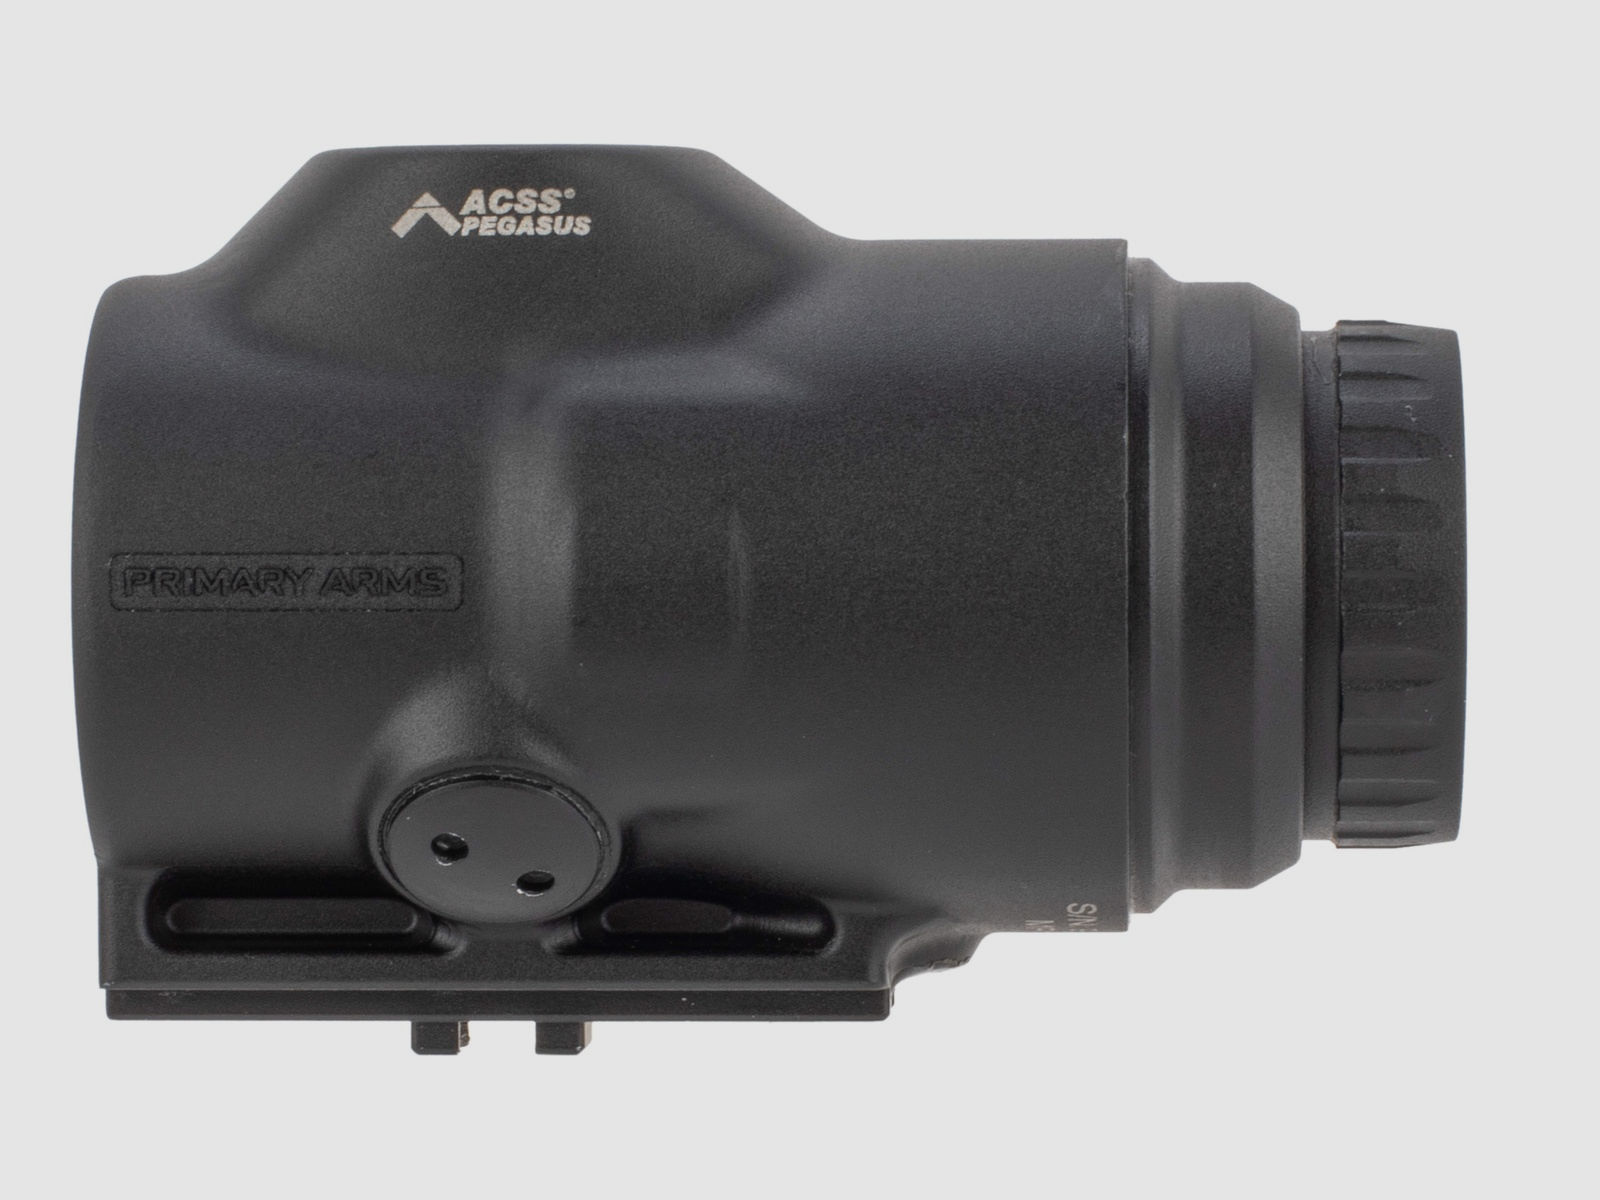 Primary Arms SLx 3x Micro Magnifier schwarz